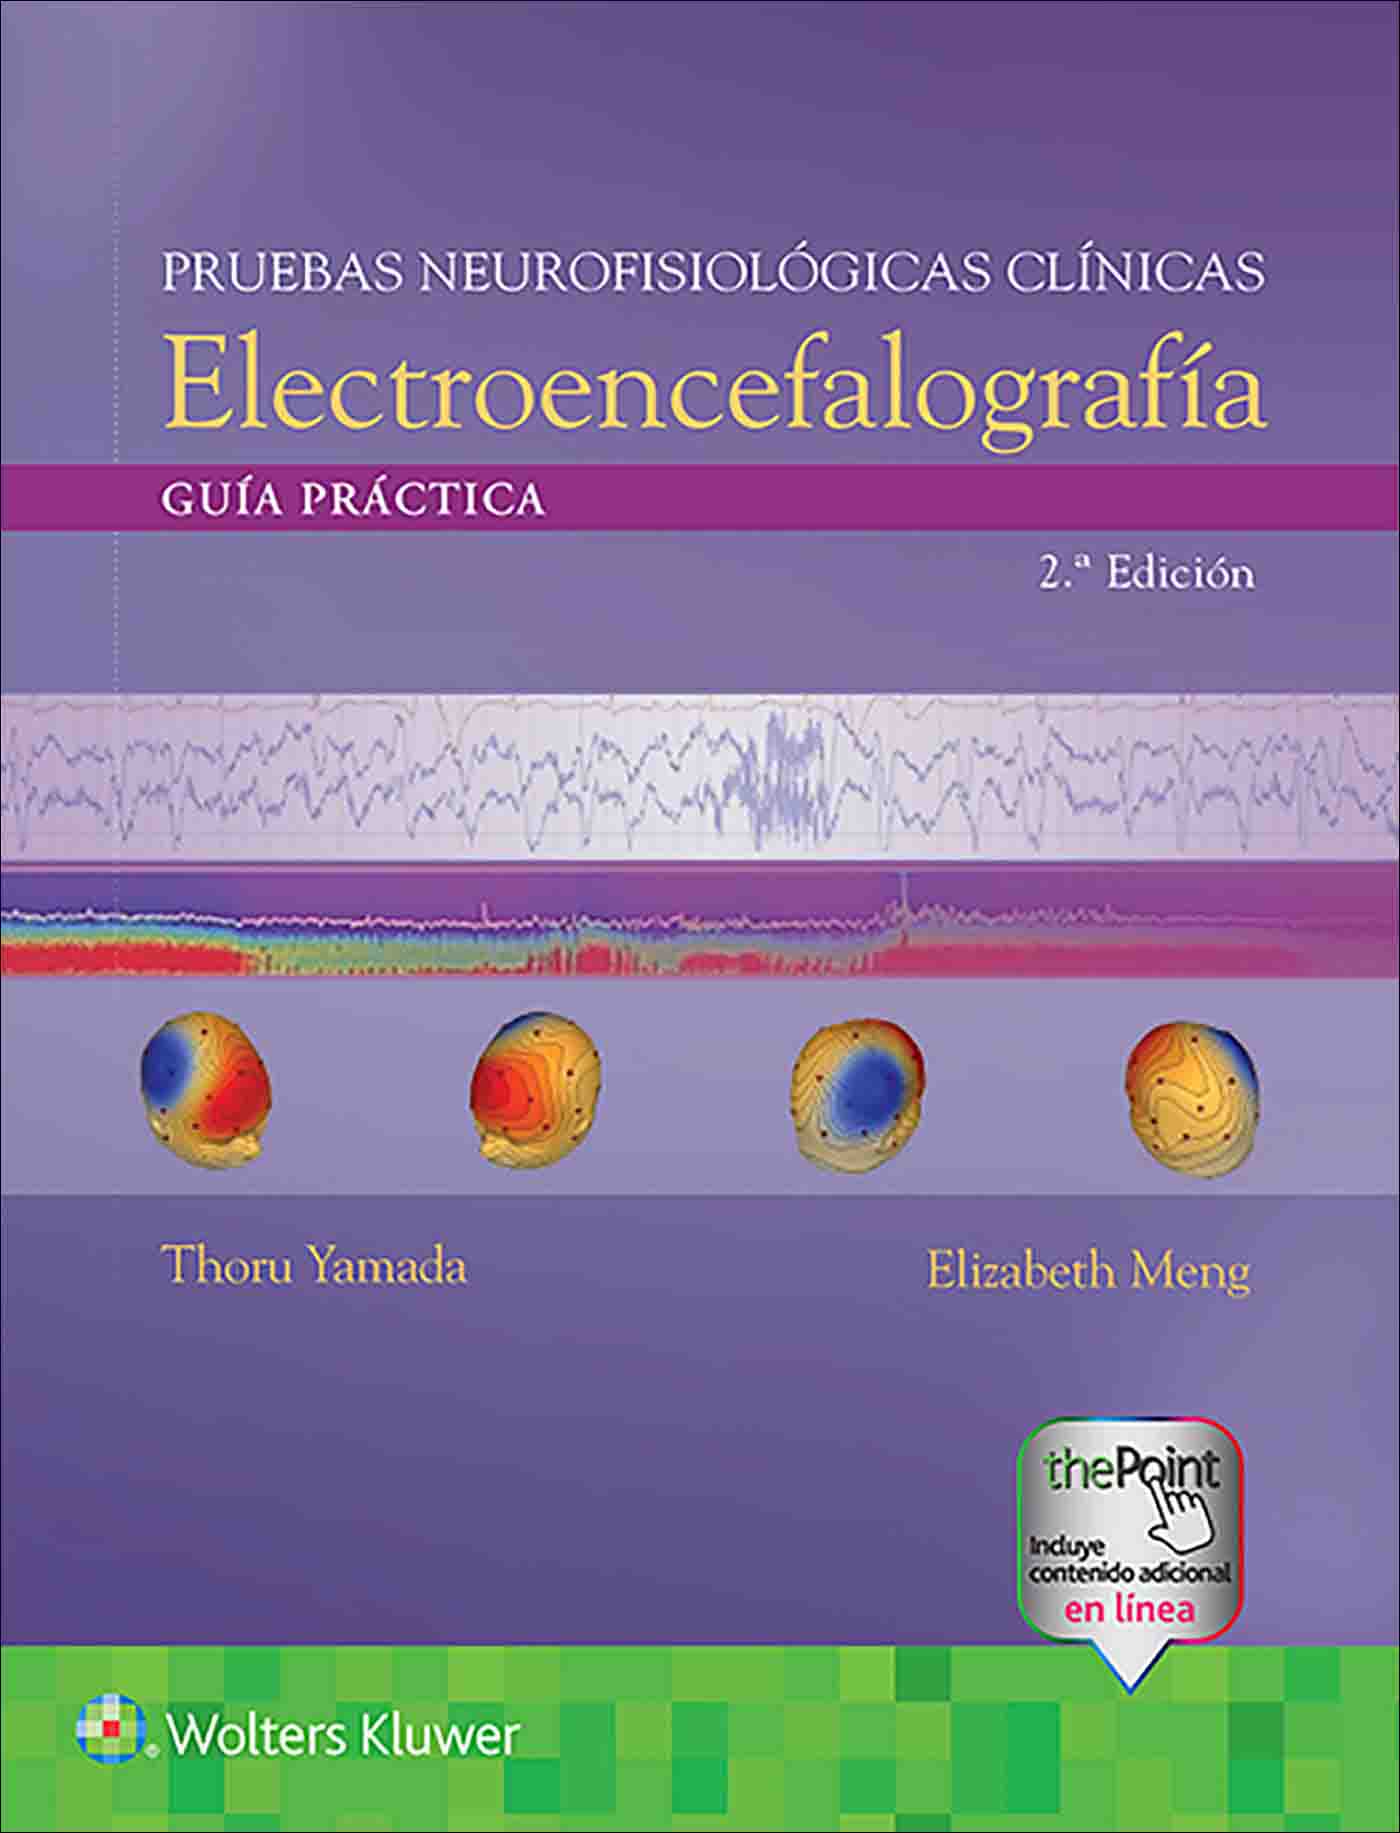 Pruebas Neurofisiológicas Clínicas. Electroencefalografía. Guía Práctica